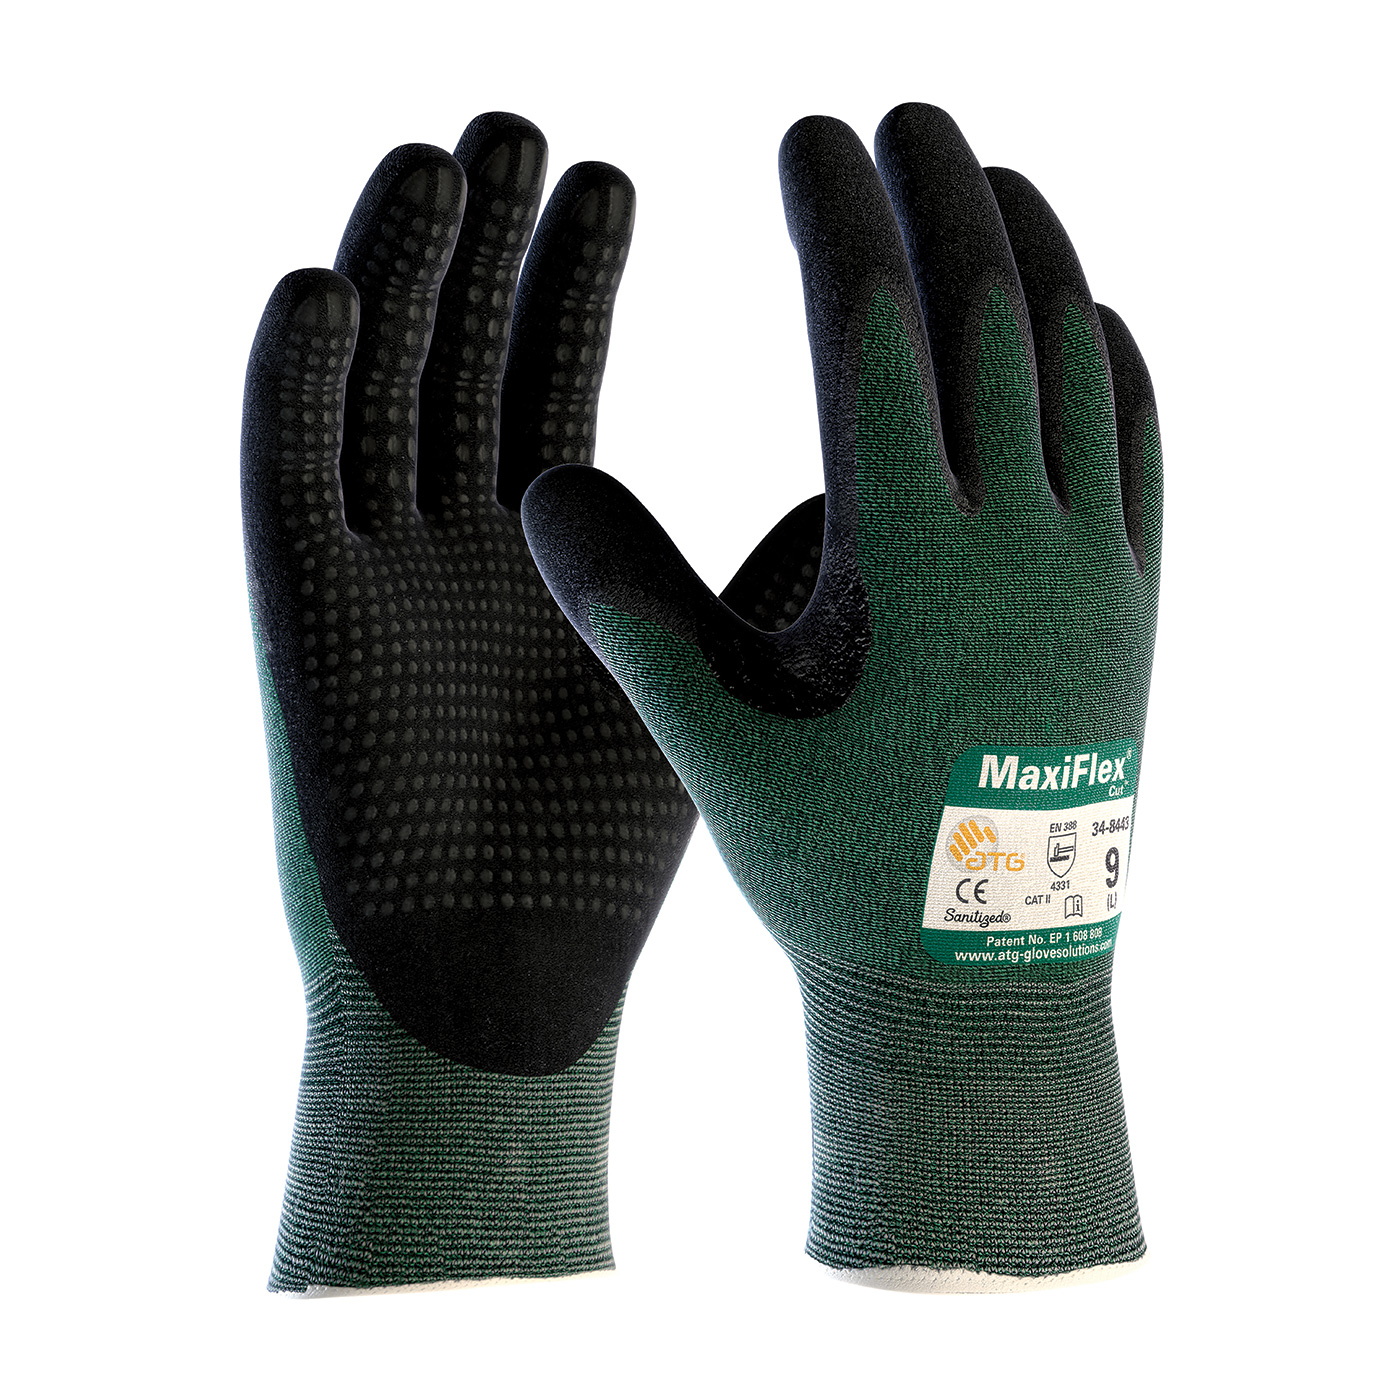 PIP 34-8443/M MaxiFlex Cut Seamless Knit Engineered Yarn Glove with Premium Nitrile Coated MicroFoam Grip on Palm & Fingers - Micro Dot Palm - Medium PID-34 8443 M